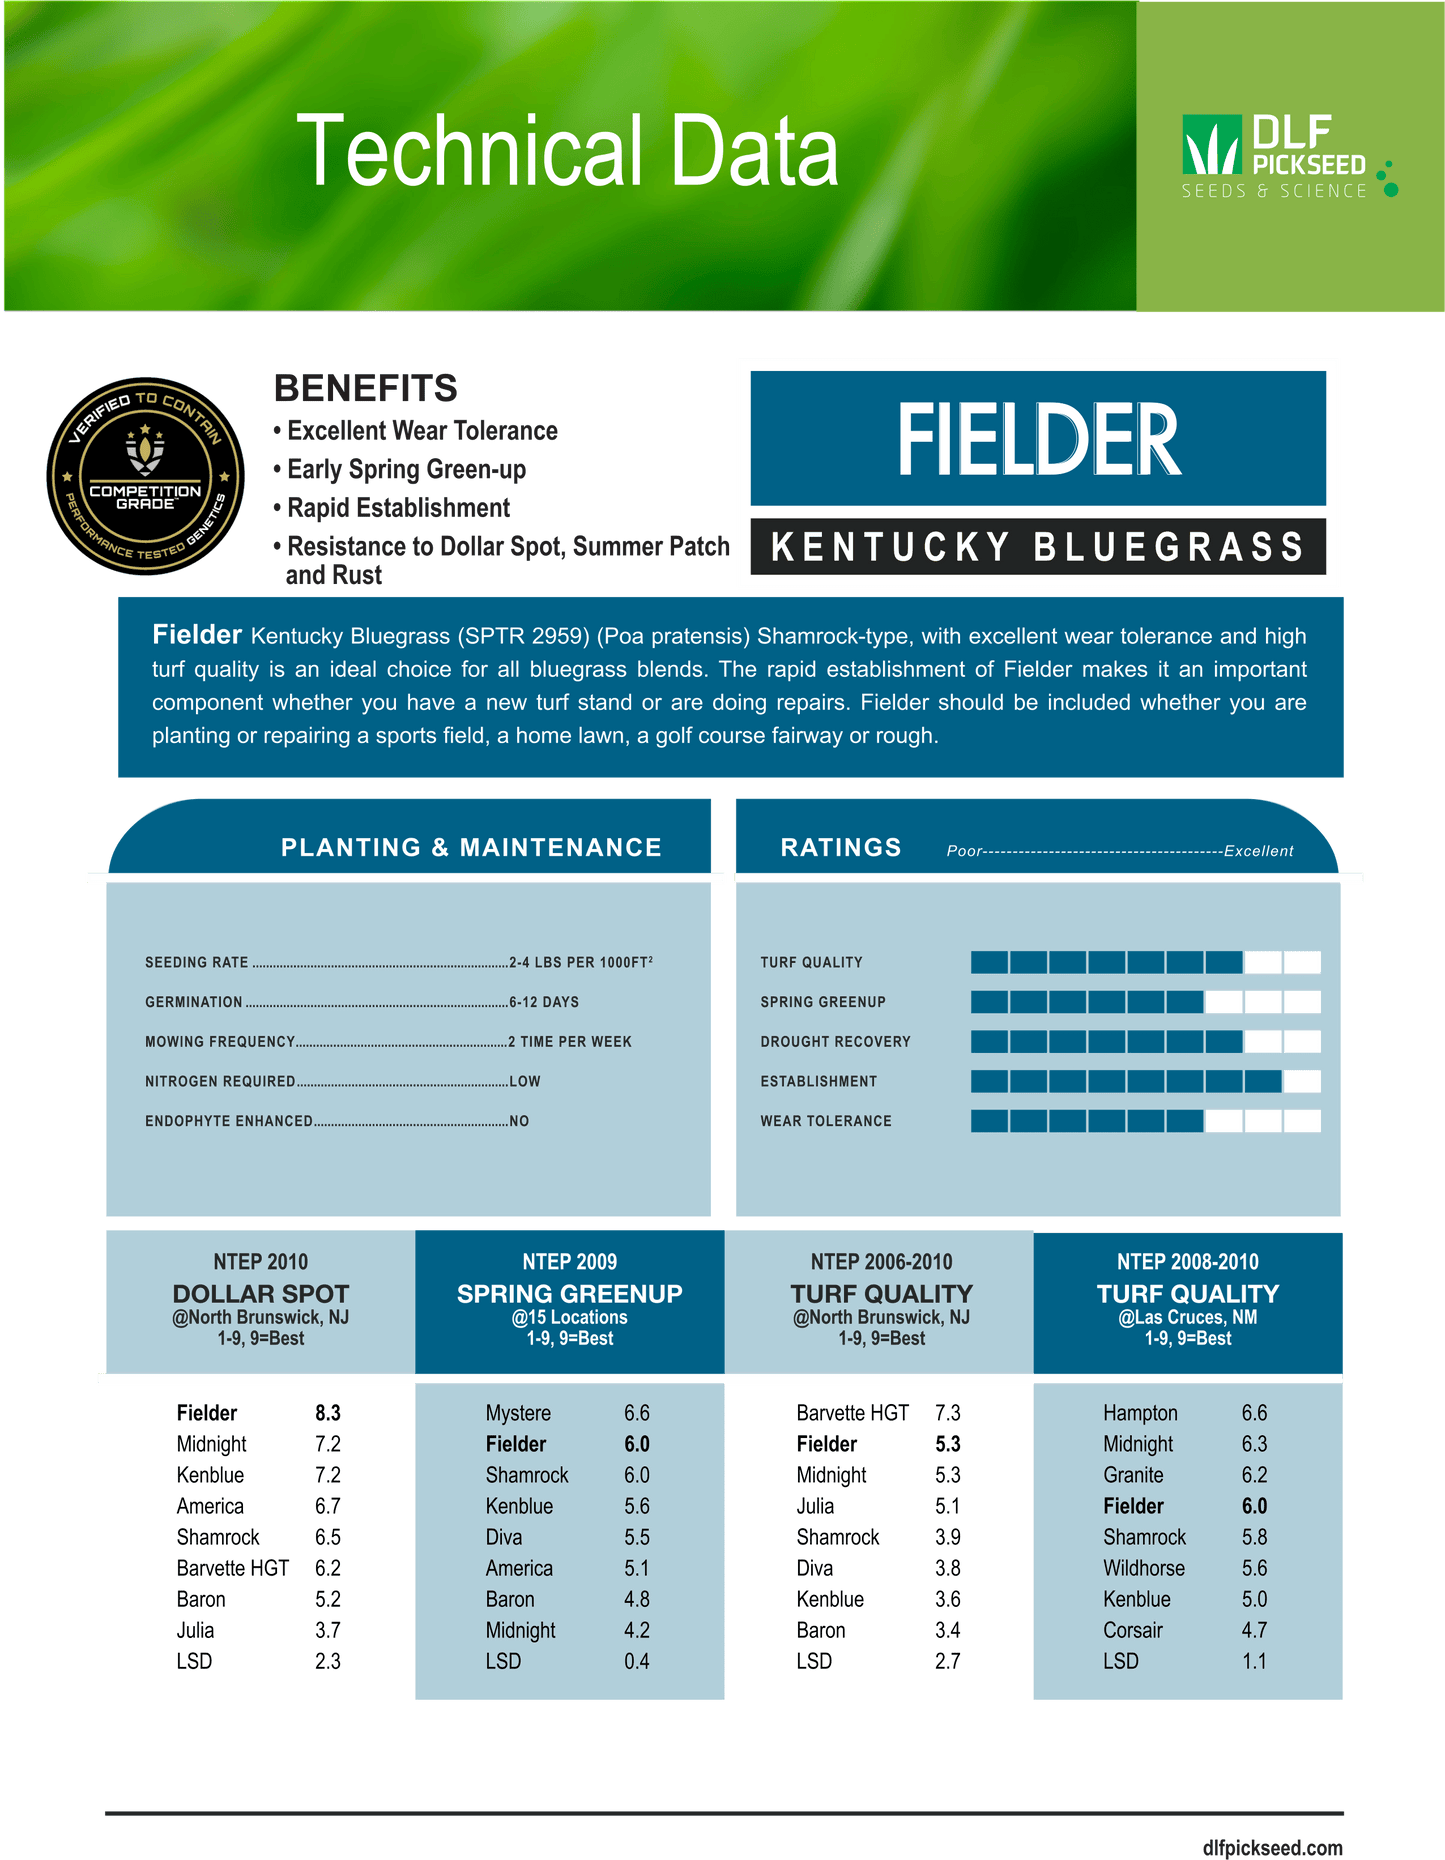 Fielder Shamrock Type - Elite Bluegrass - Growforge